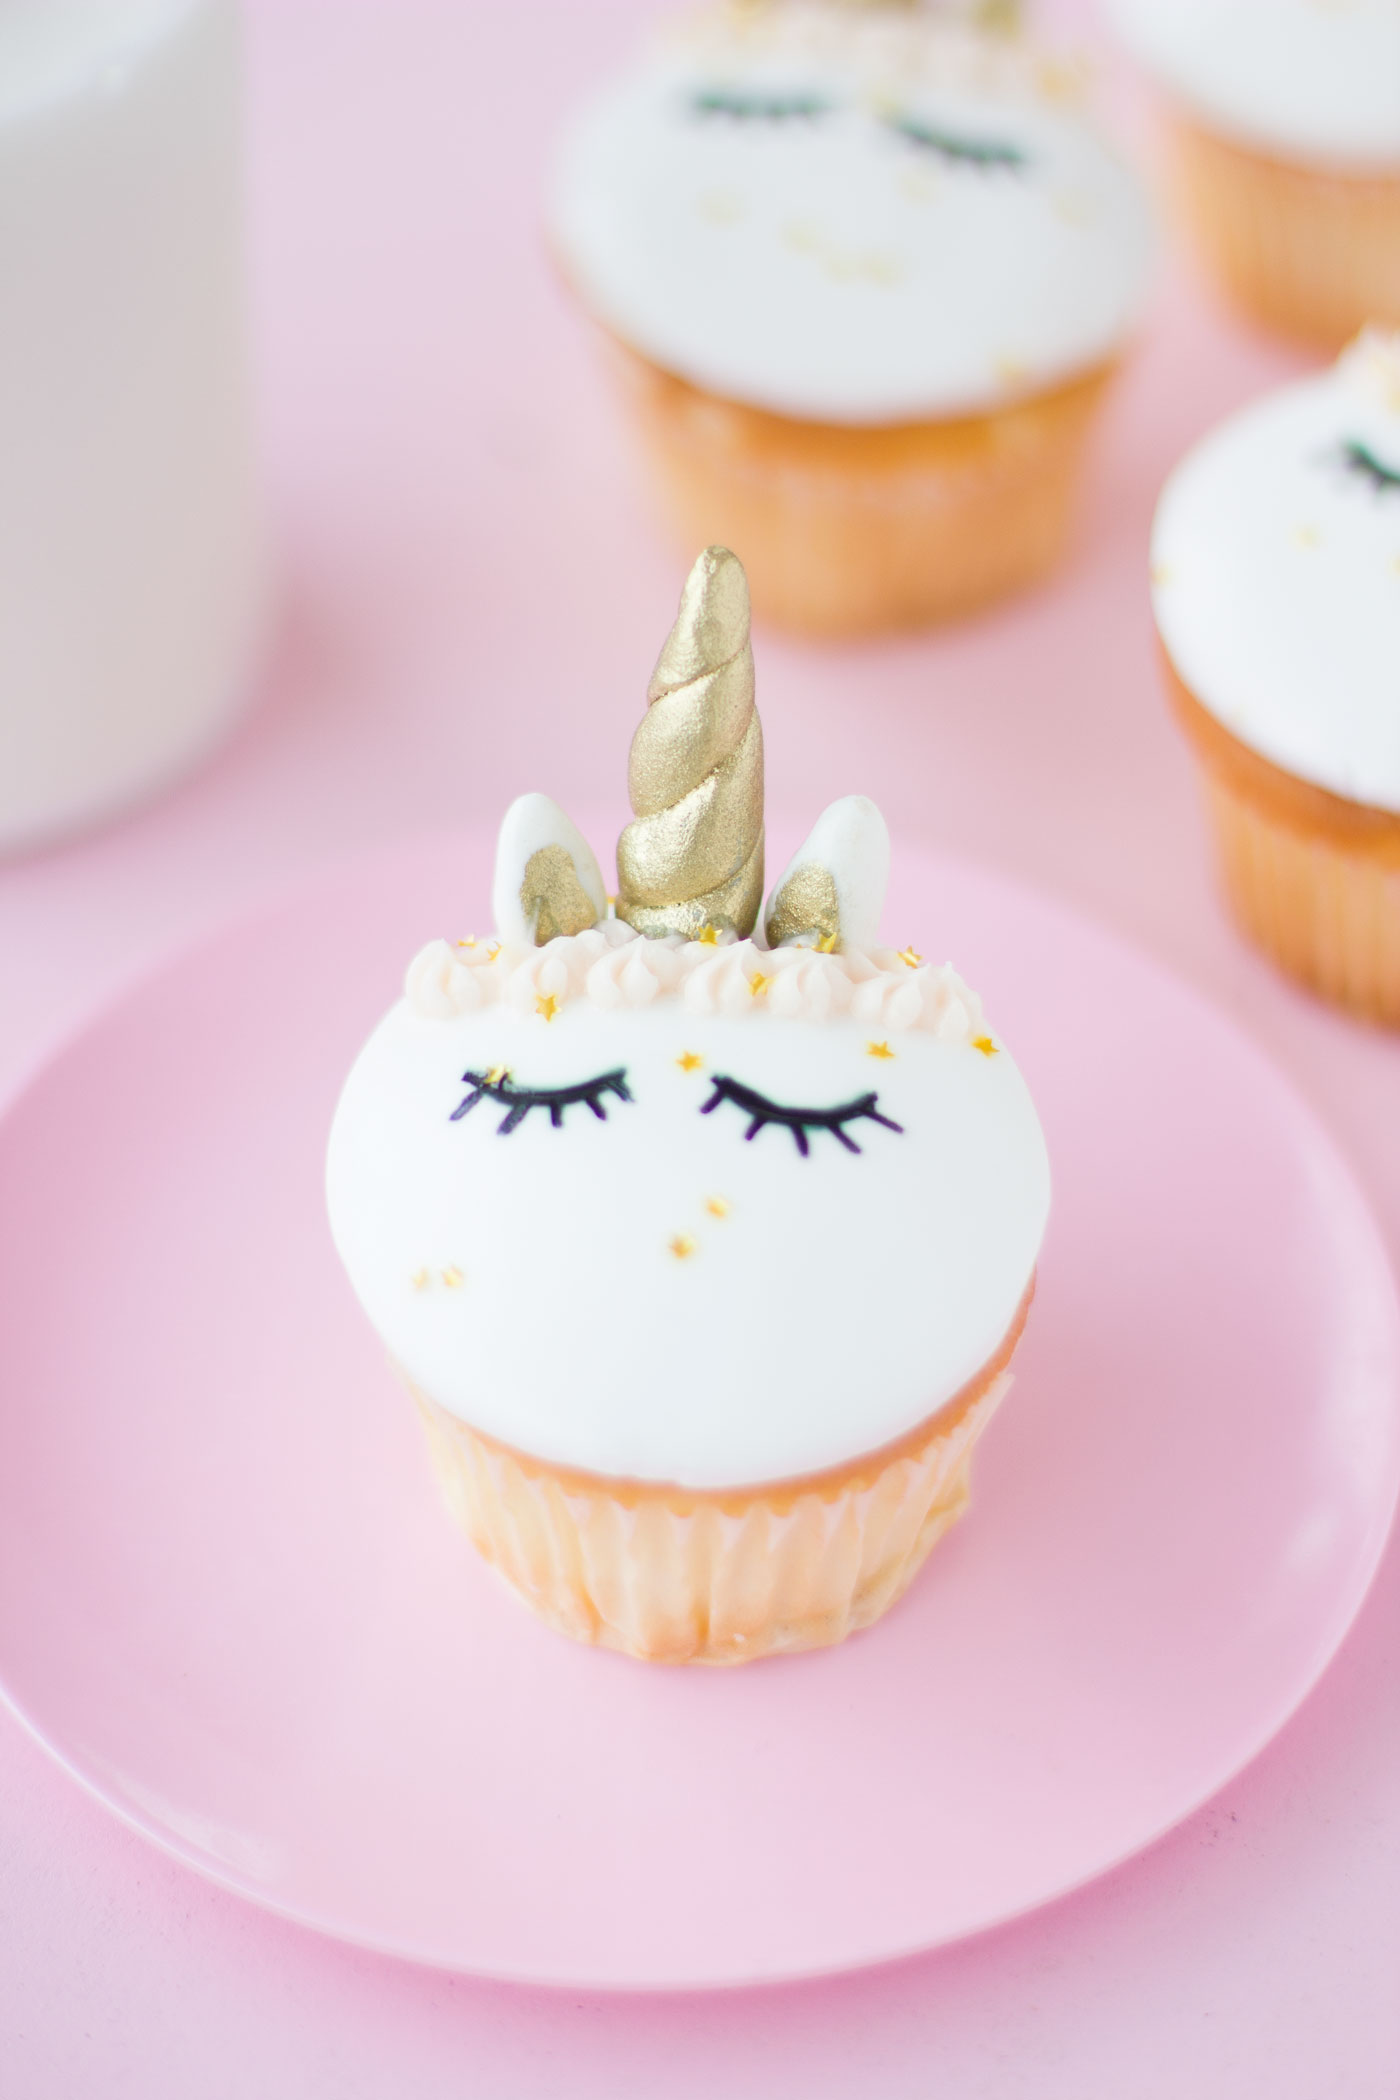 How to Make Unicorn Cupcakes